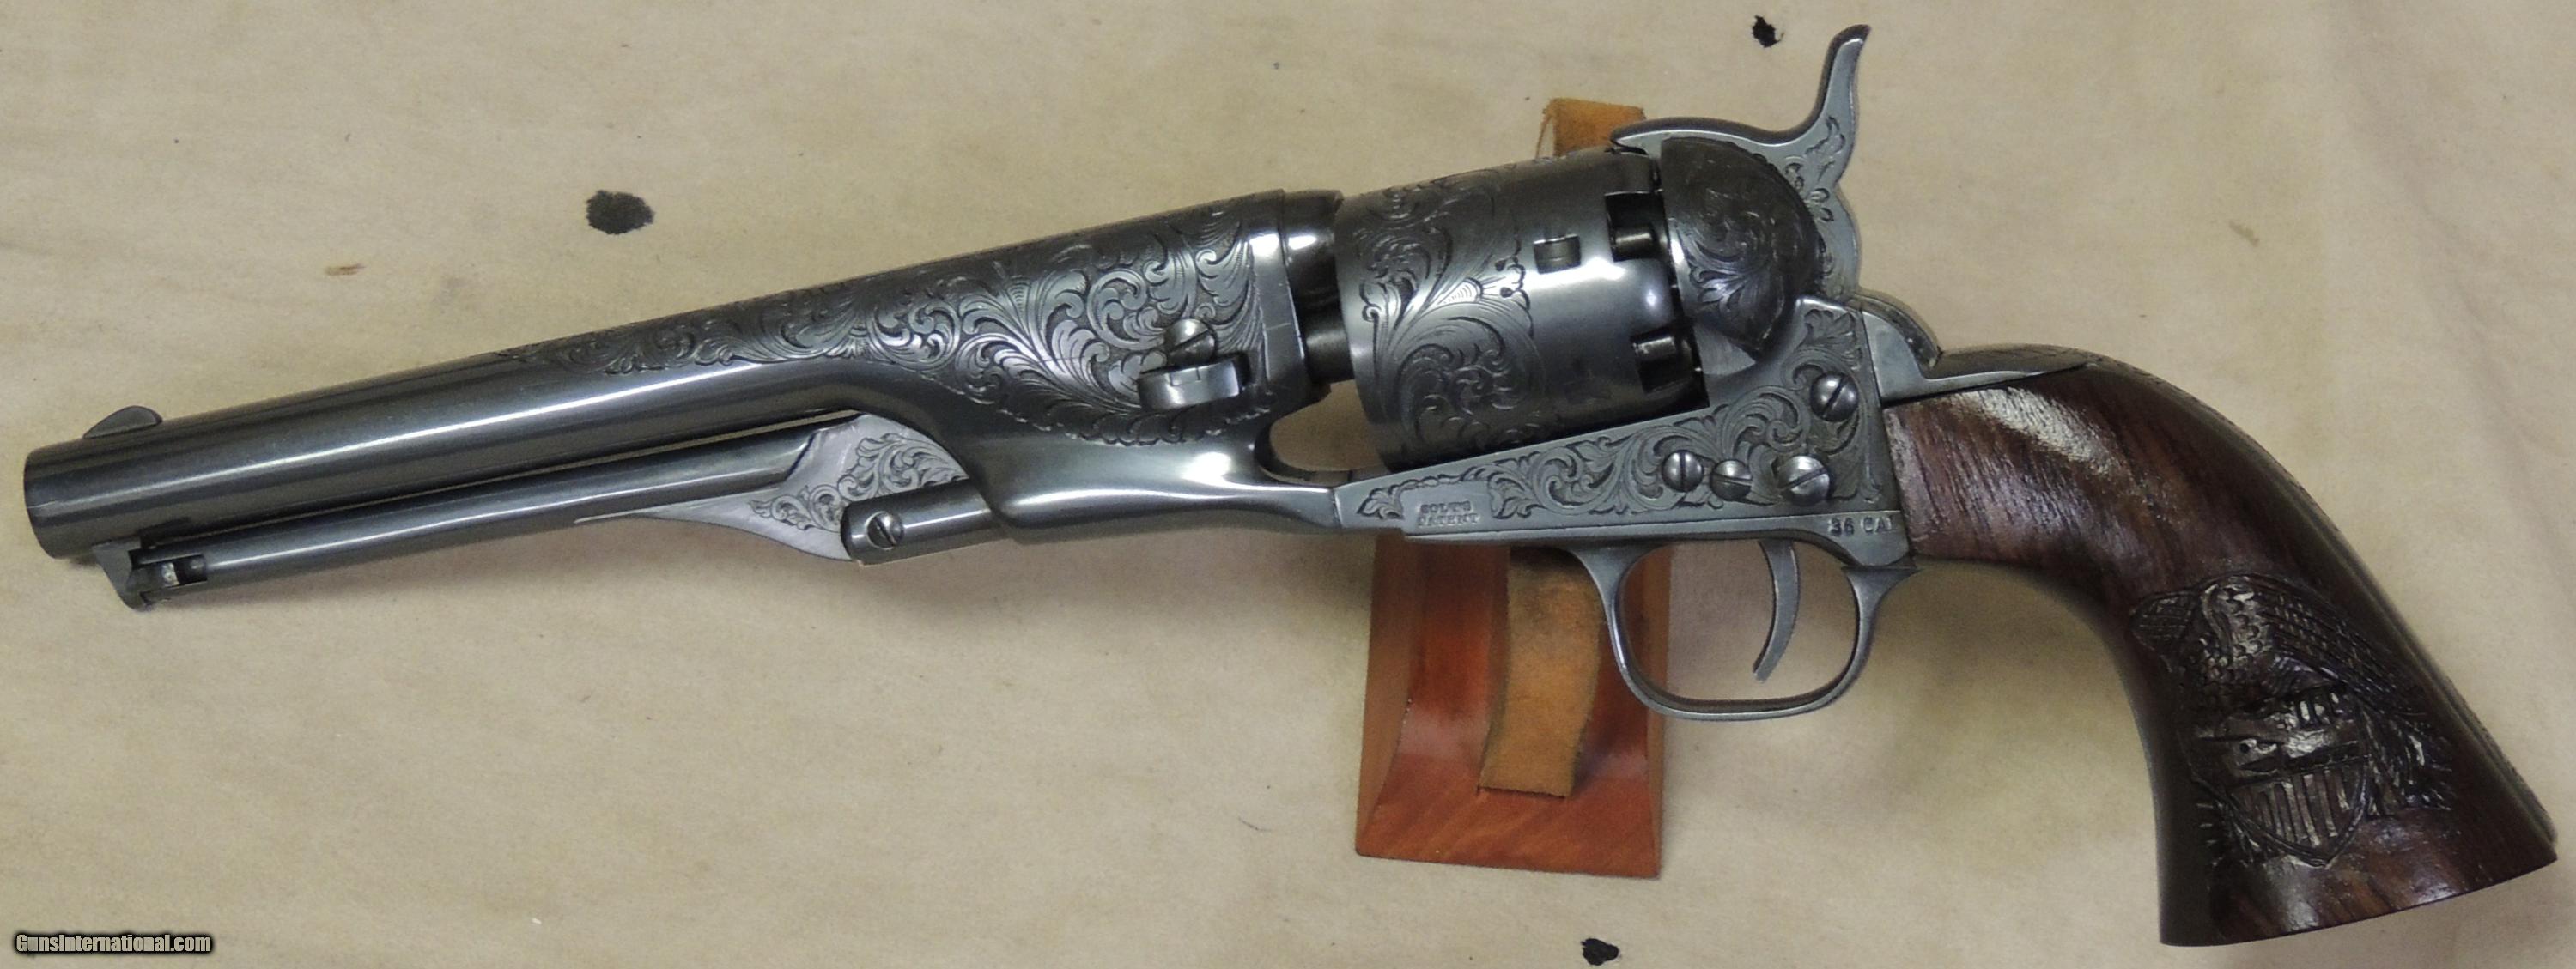 Colt 1861 Navy 3rd Gen General Custer Signature Series Revolver NIB S/N